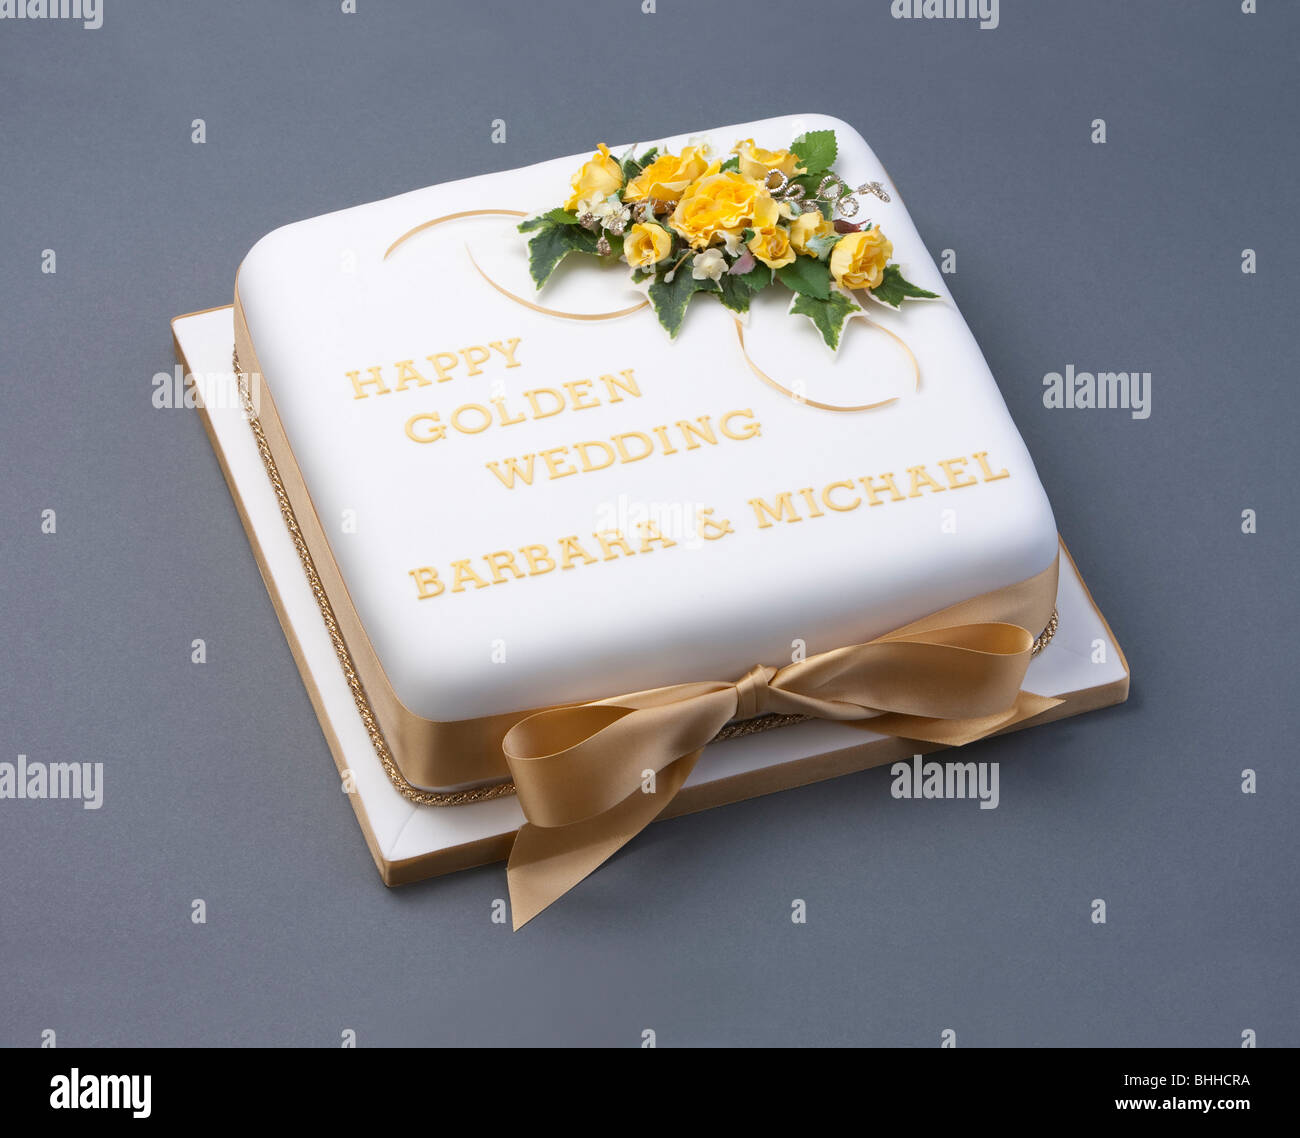 wedding anniversary cake Stock Photo - Alamy